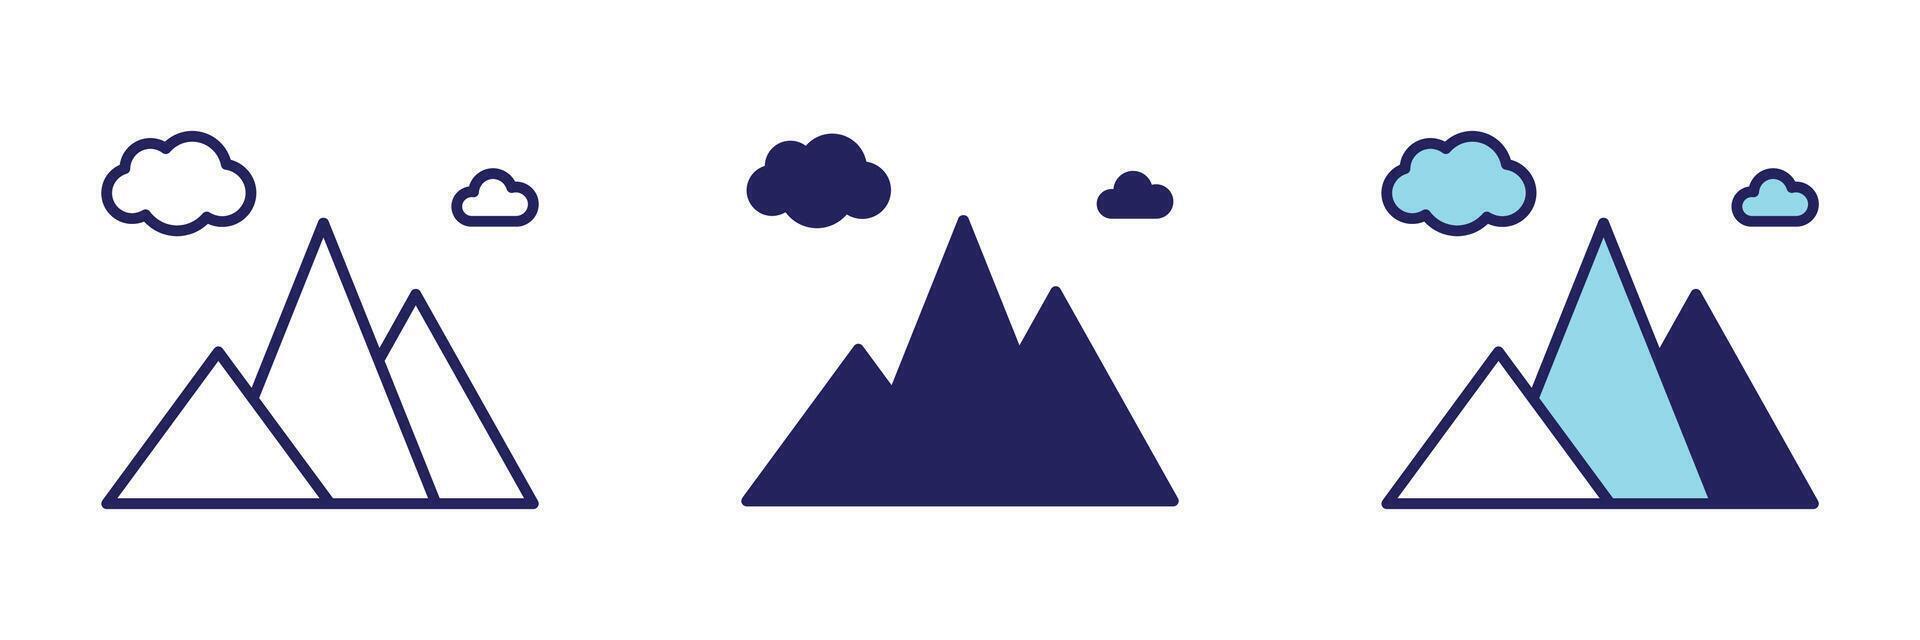 Mountains Icon - Navigation Set vector